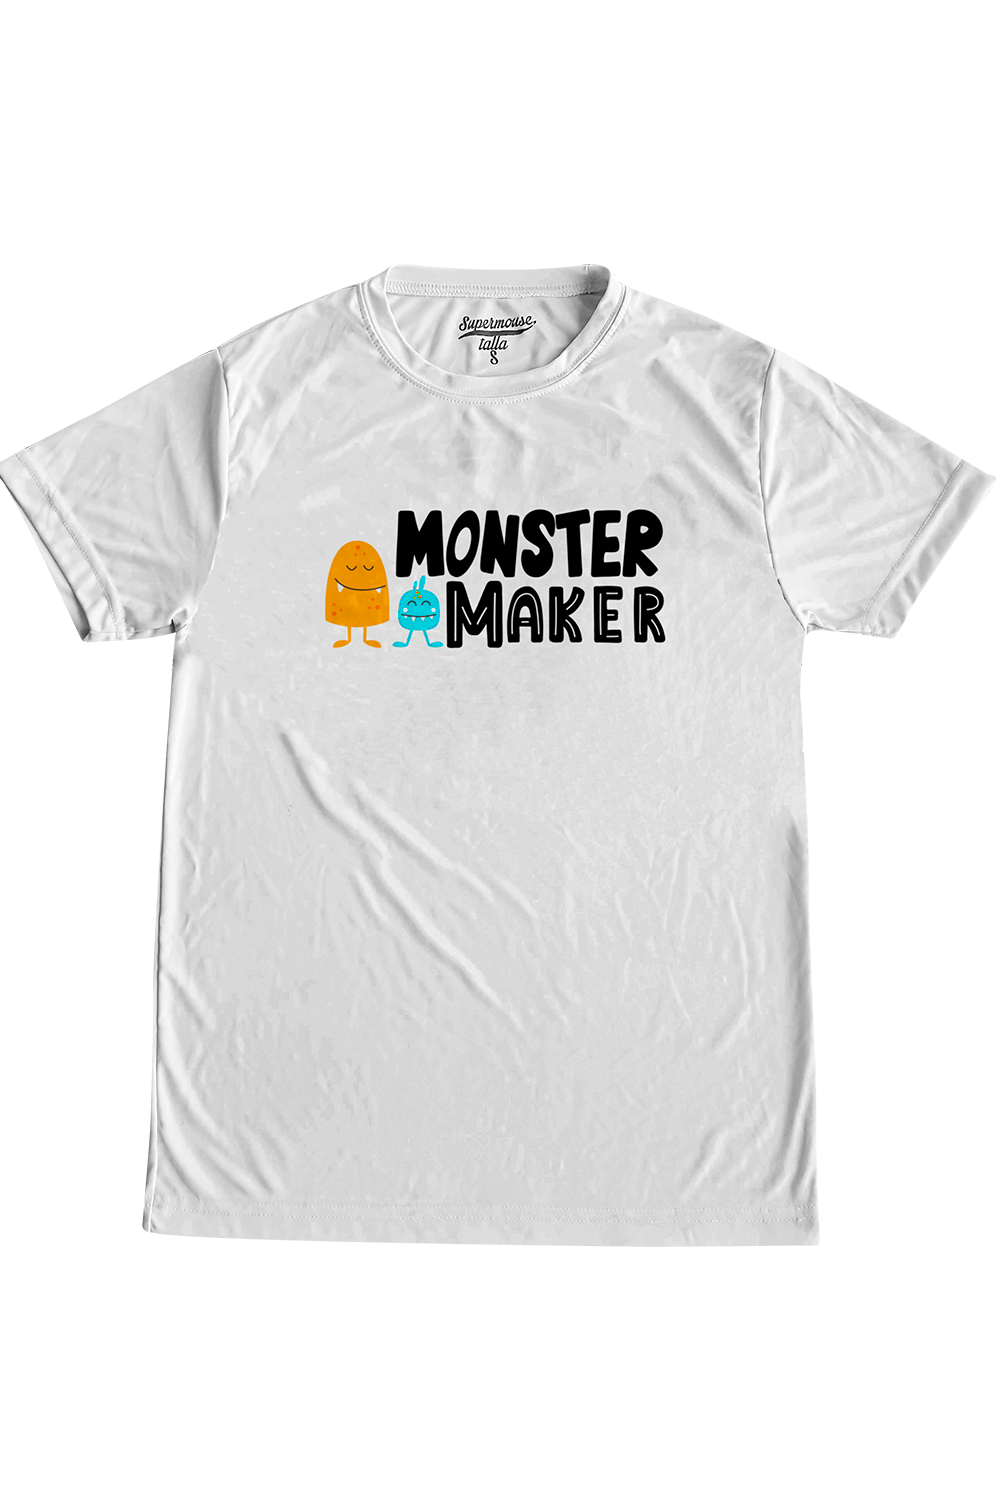 Playera Caballero manga corta. Monster Maker